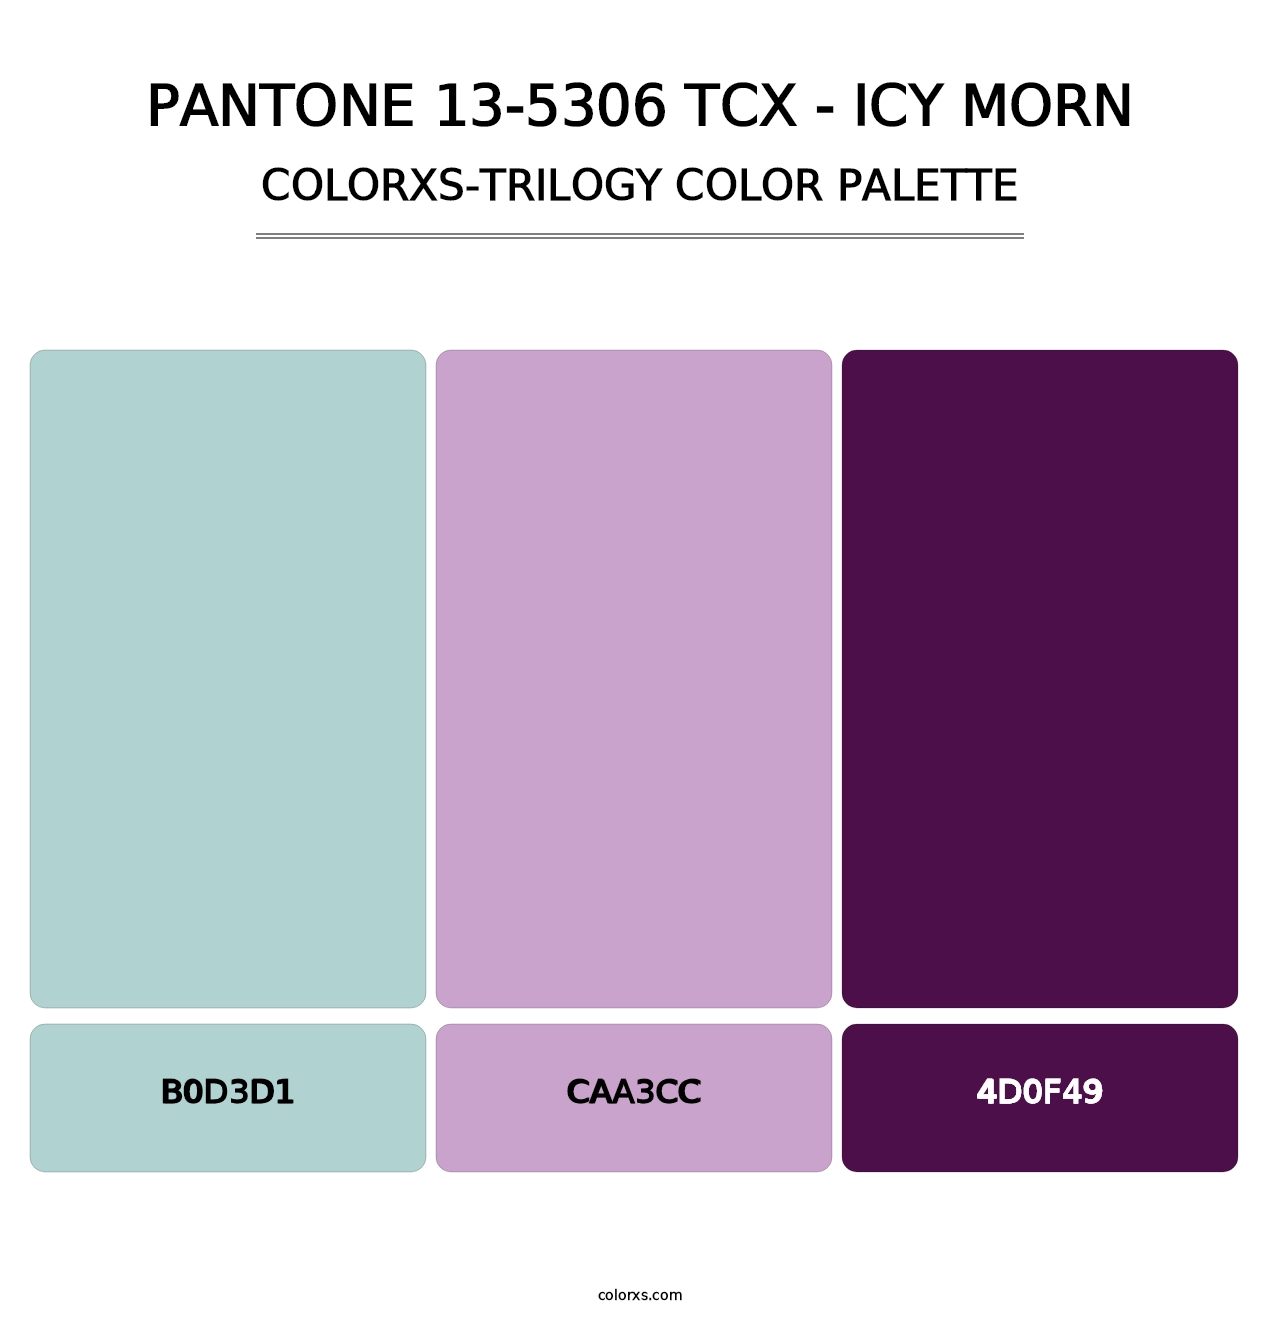 PANTONE 13-5306 TCX - Icy Morn - Colorxs Trilogy Palette